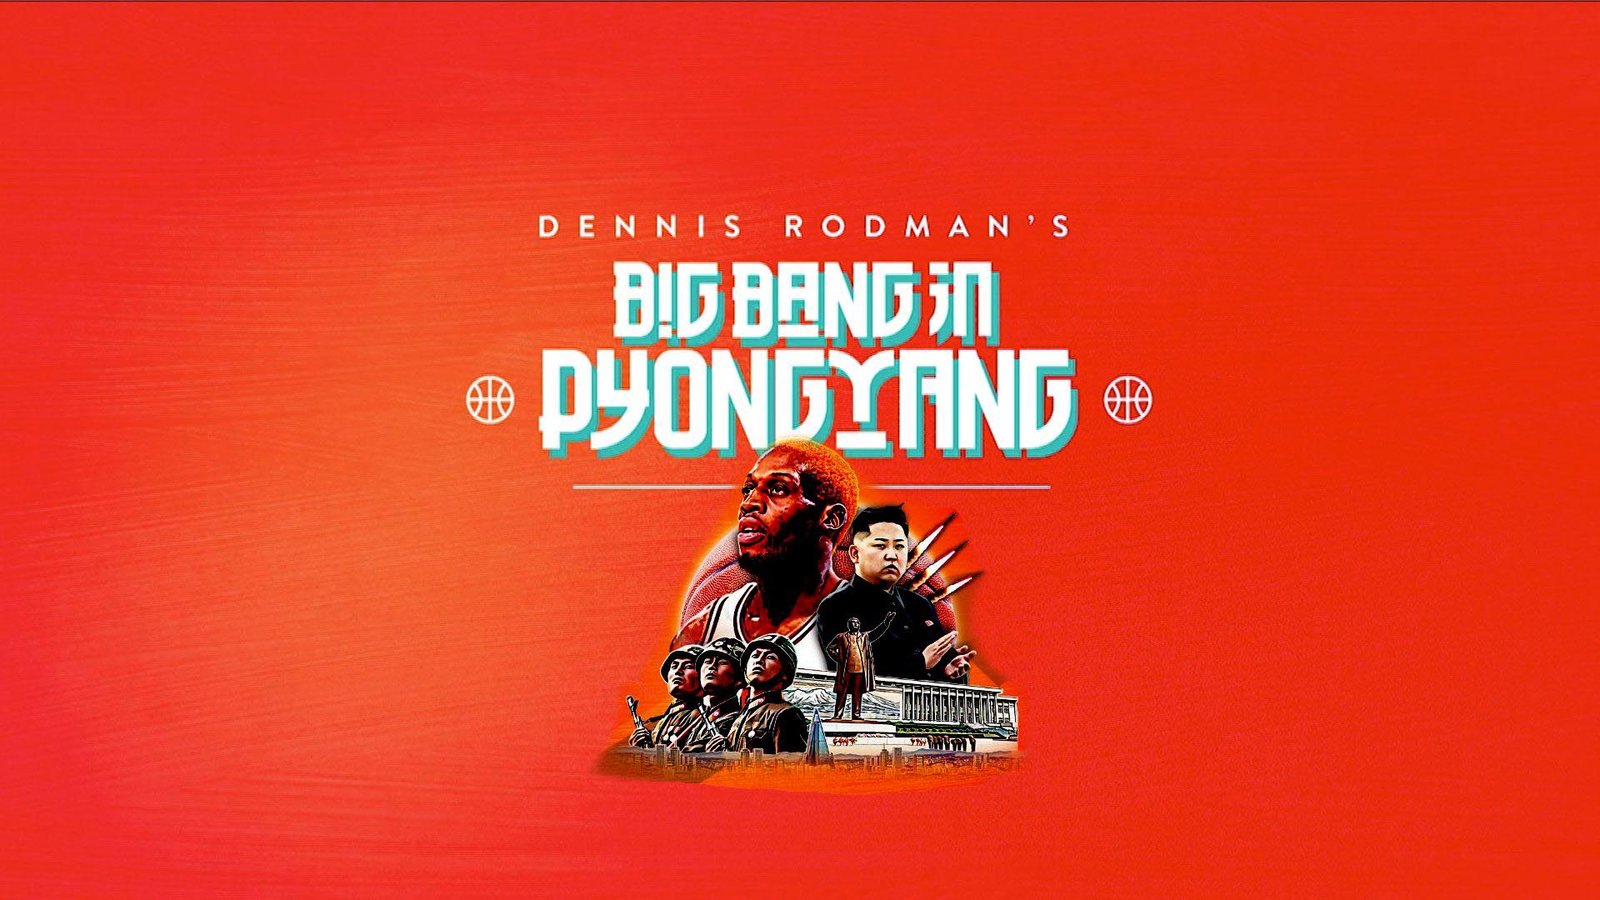 Dennis Rodman’s Big Bang in Pyongyang